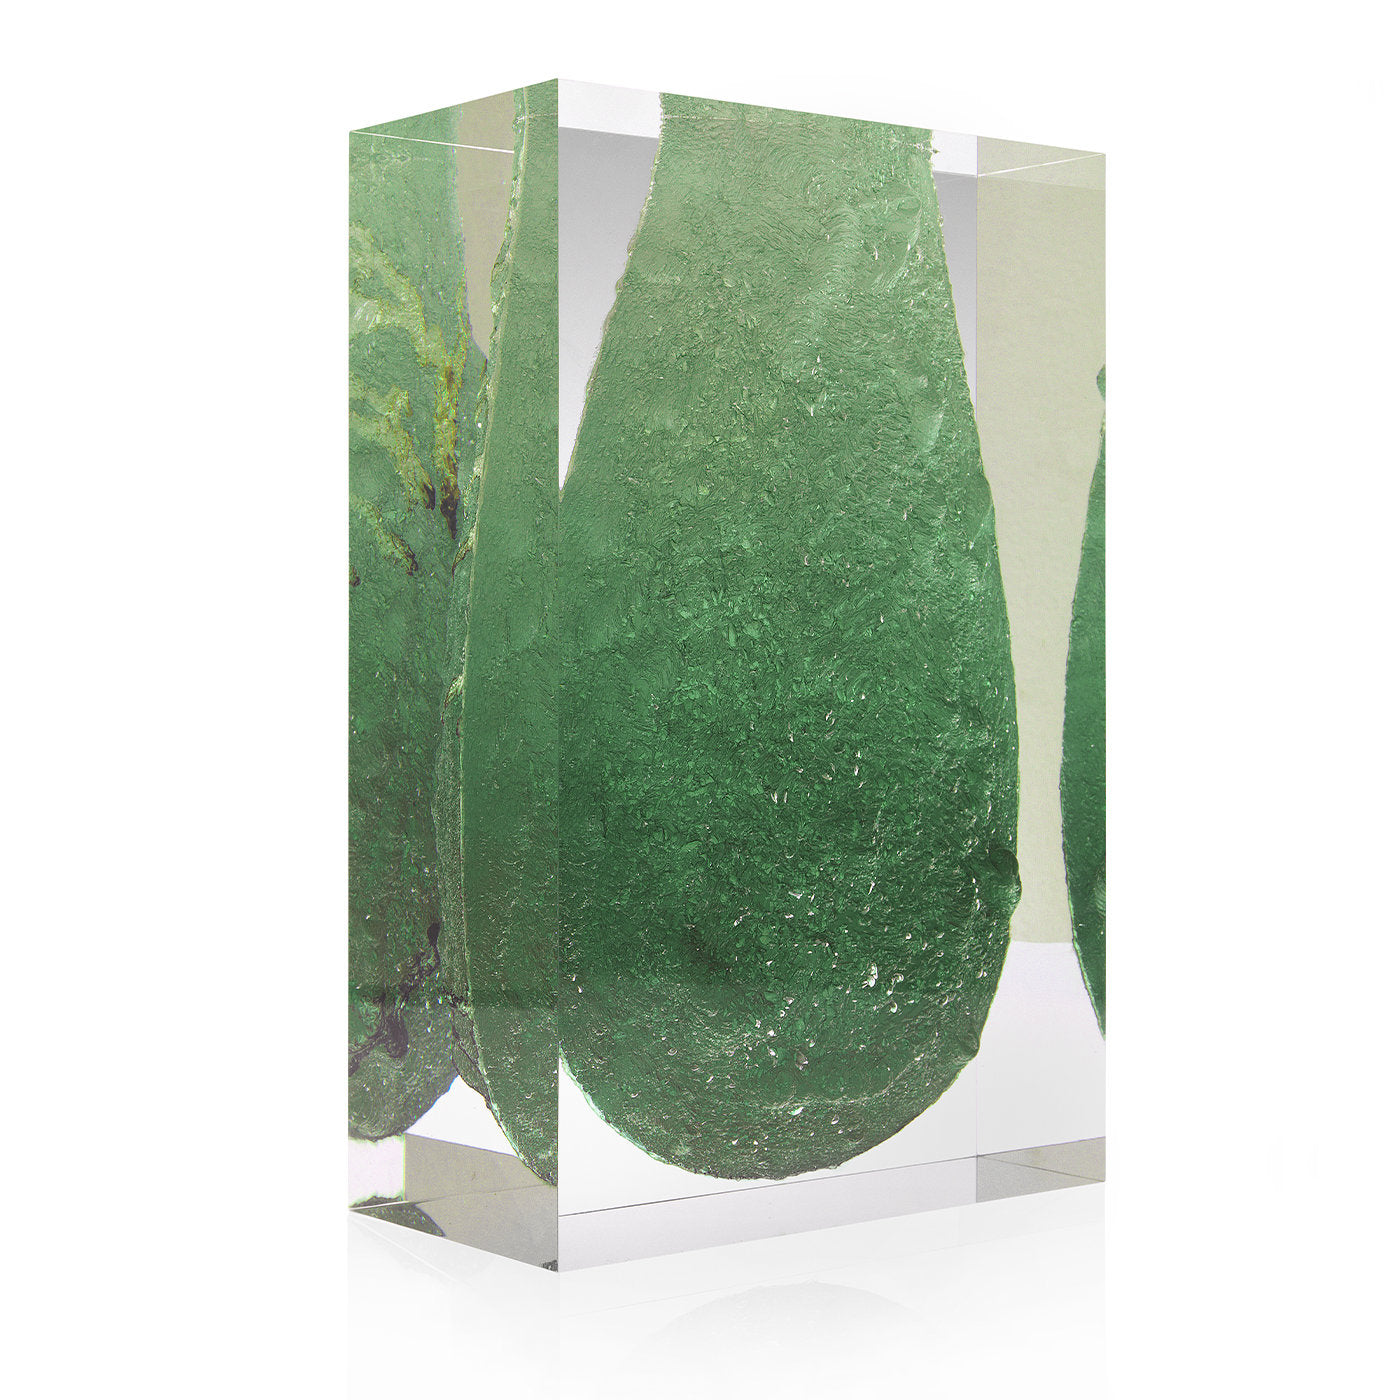 Glacoja Emerald Vase by Analogia Project - Alternative view 2